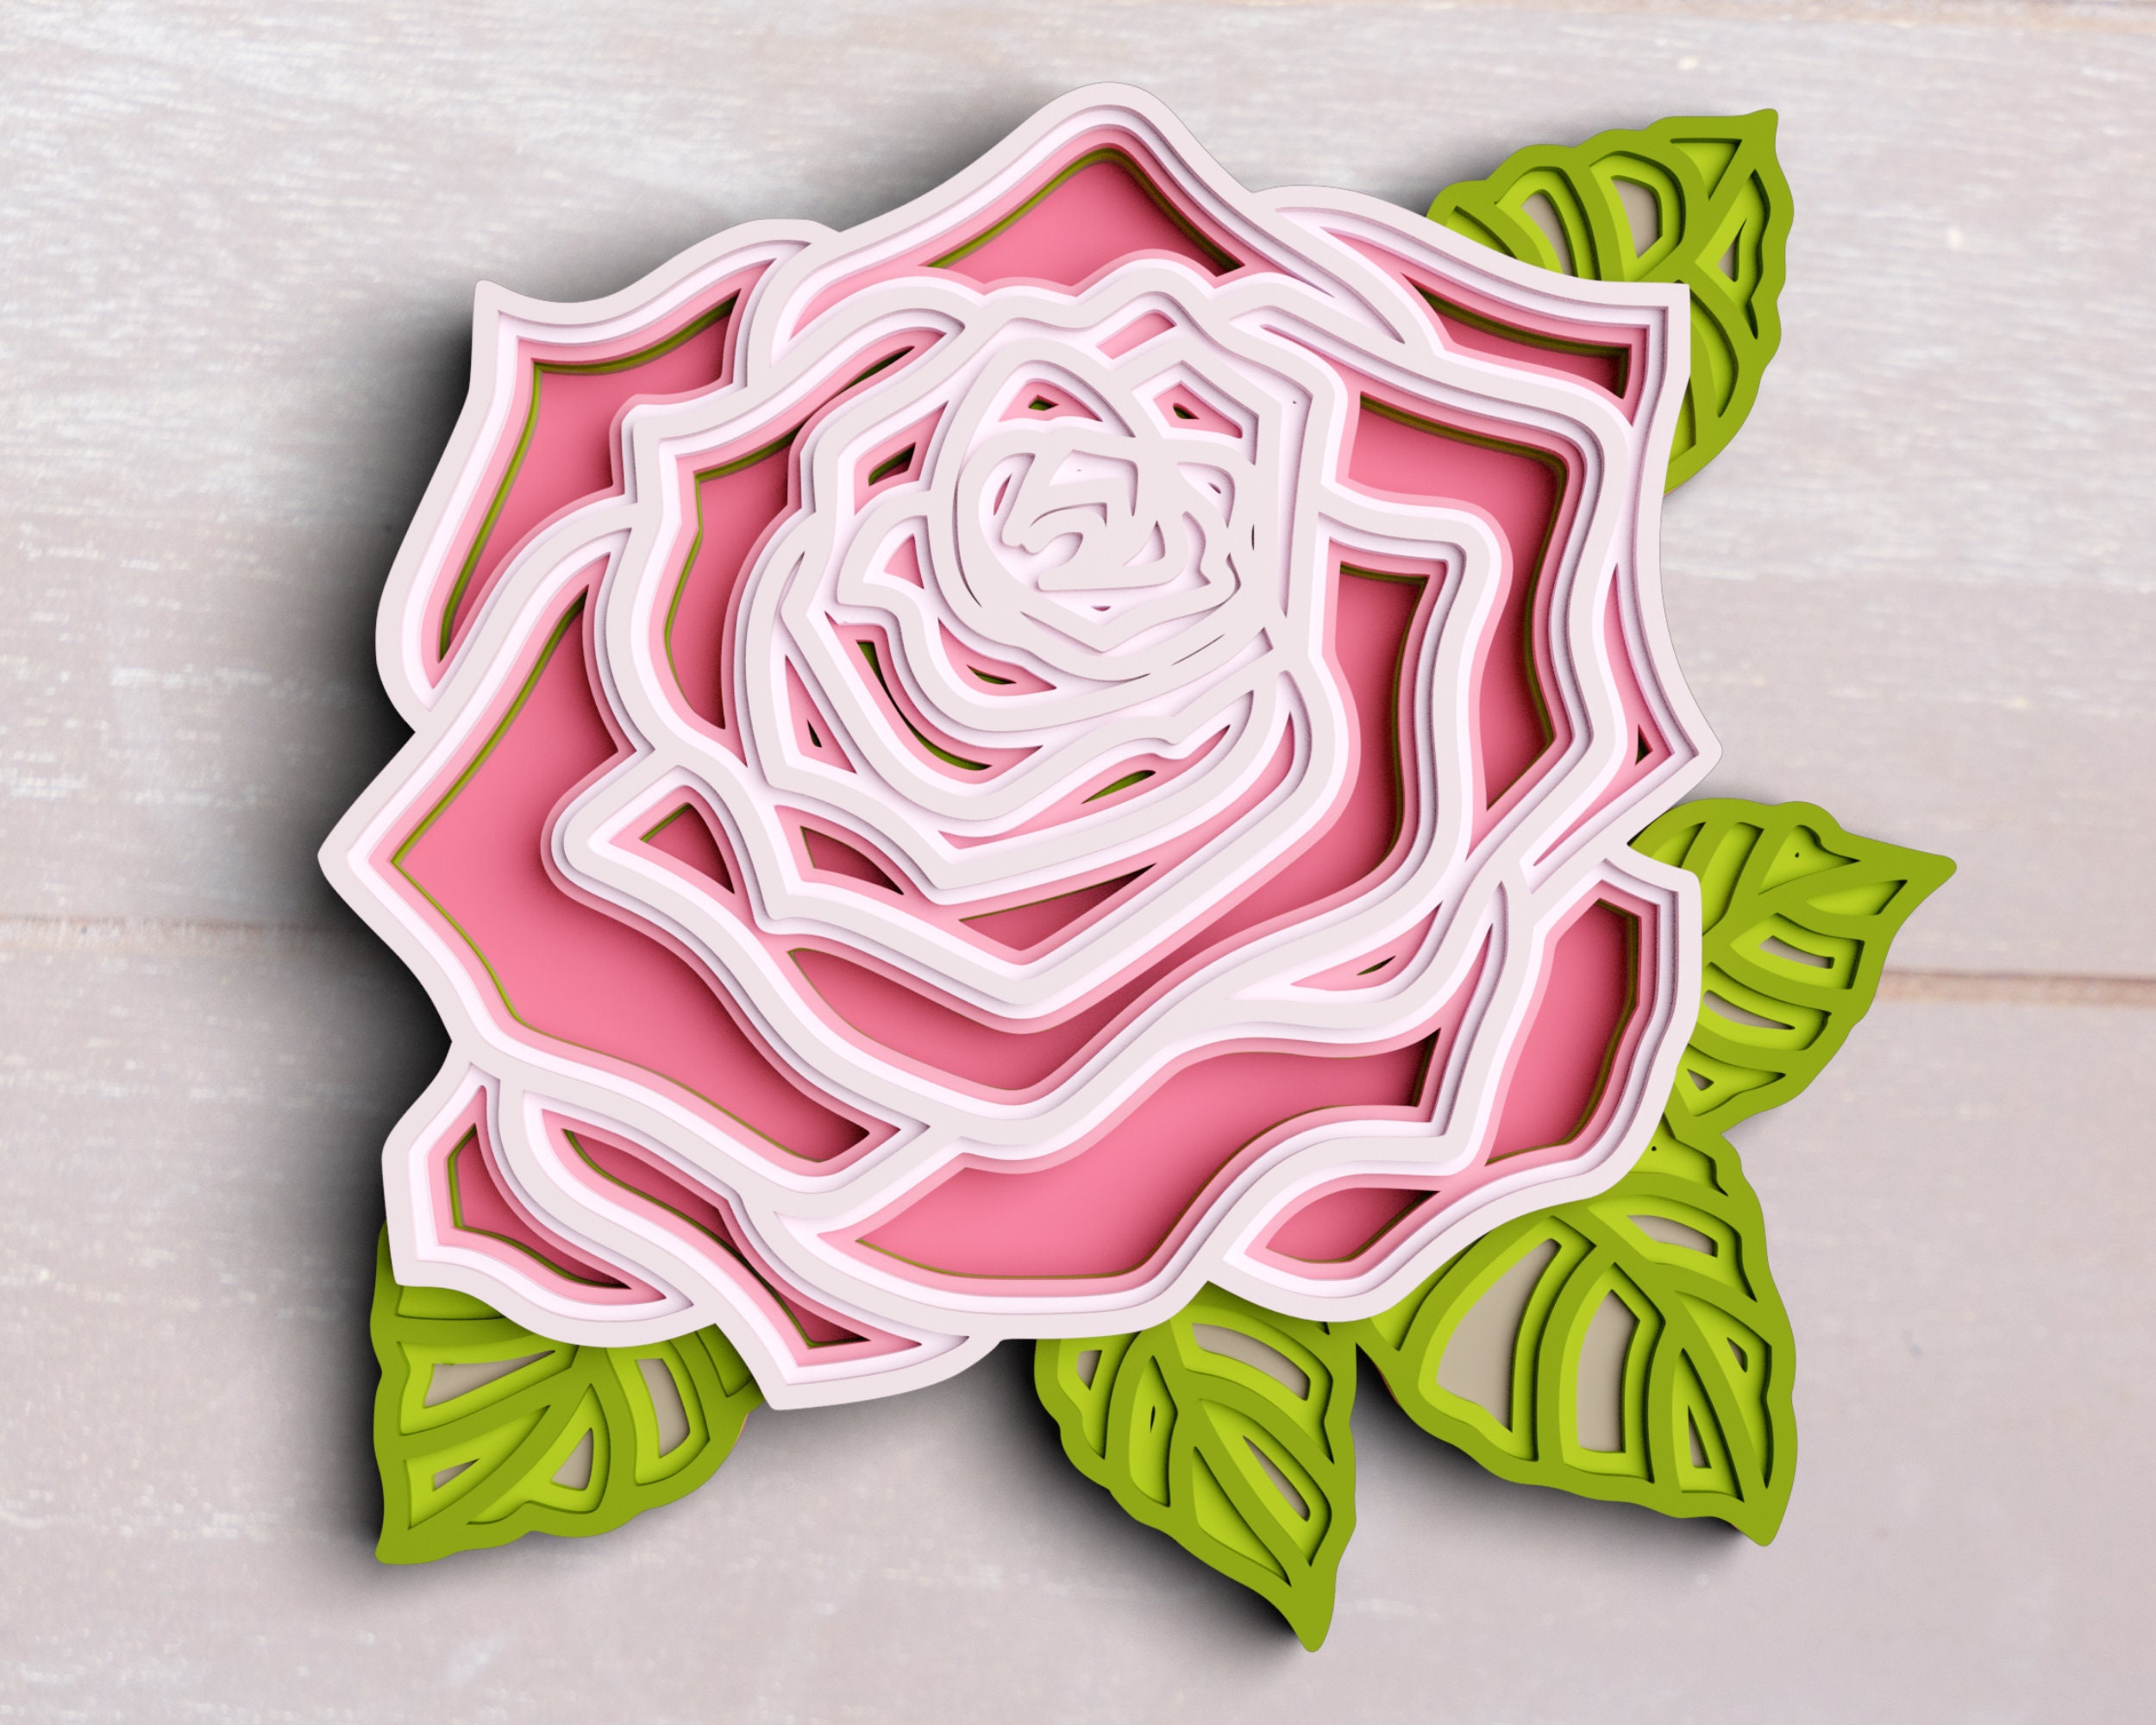 Rose SVG Cut File Template for Cricut and Silhouette – Digital Art Dreams